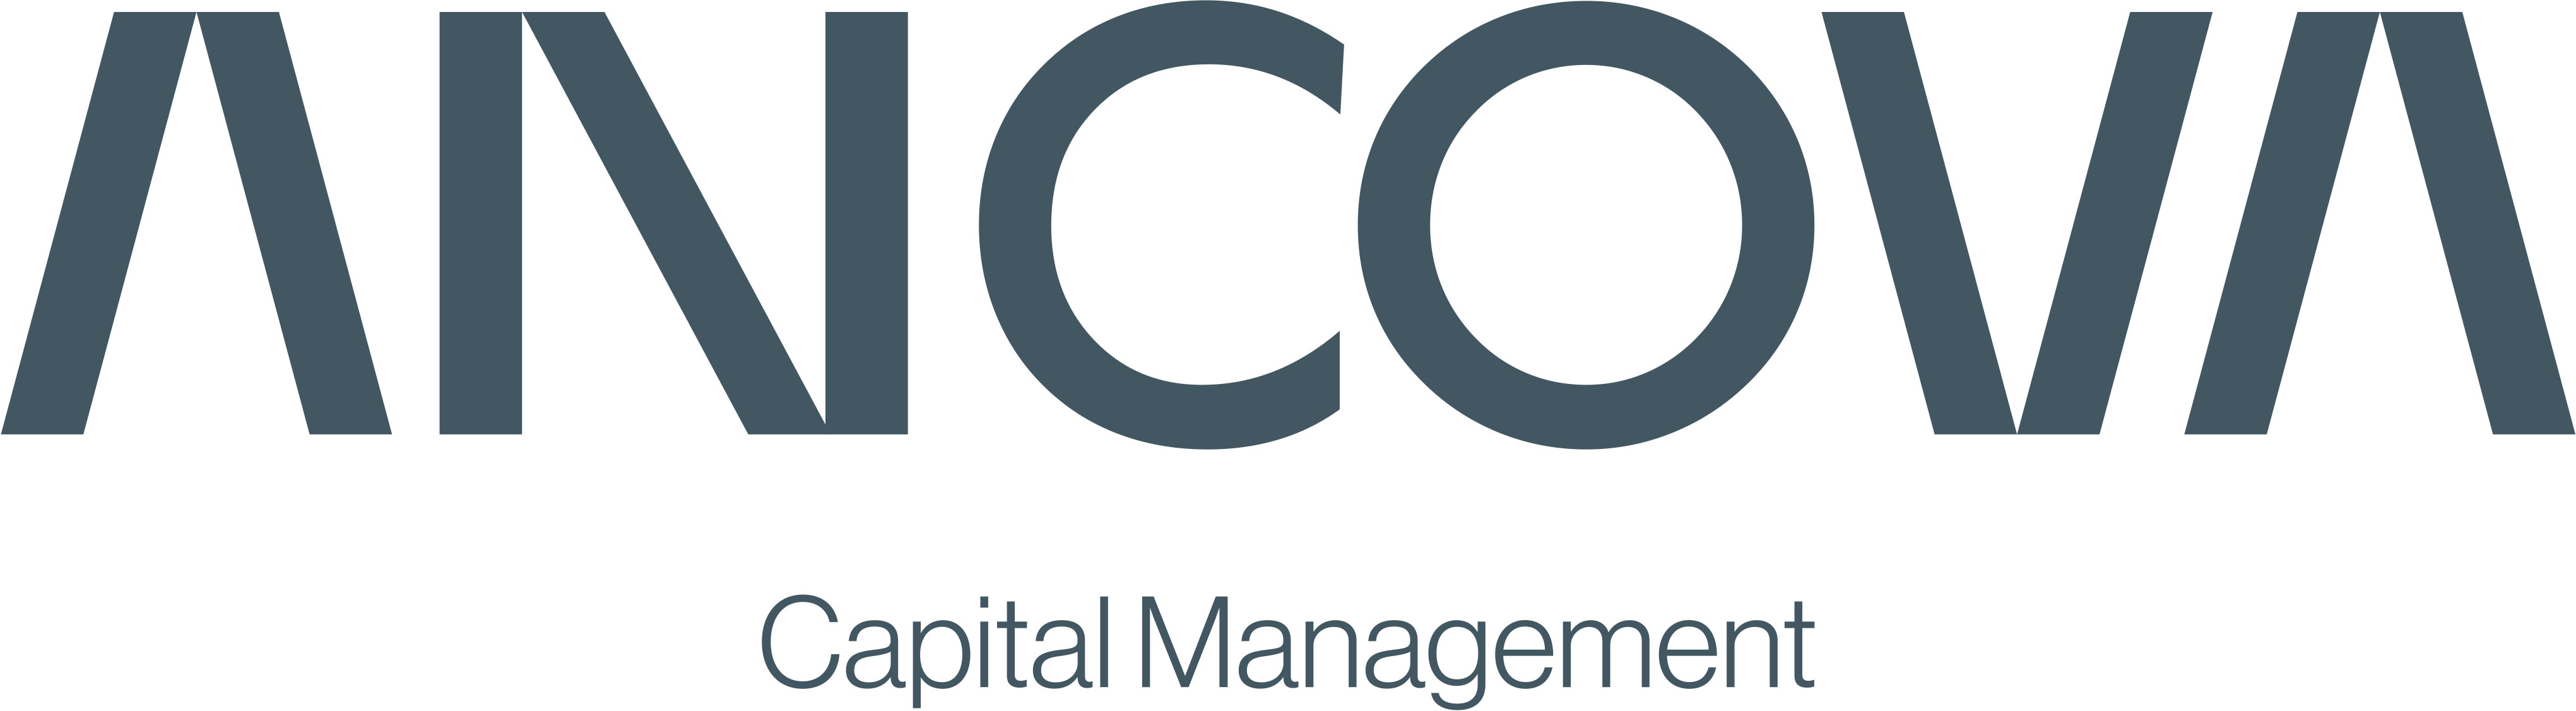 Ancova Capital Management logo